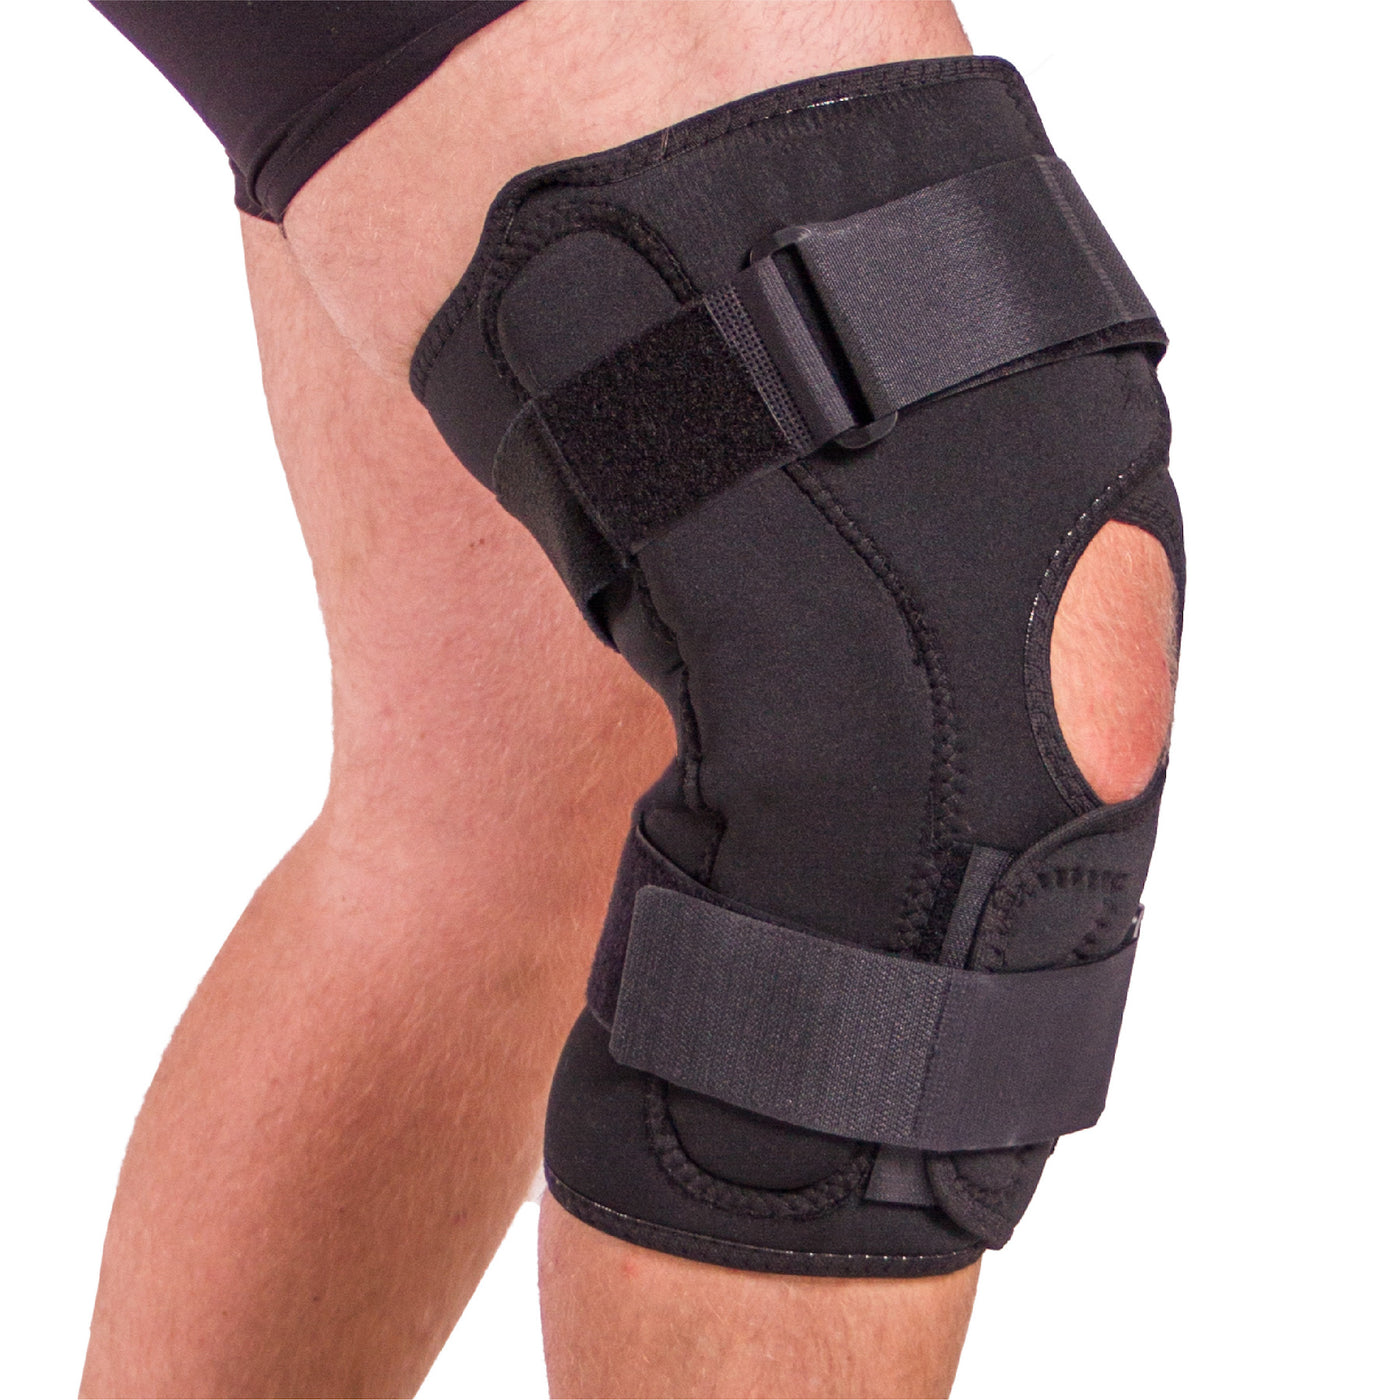 Types of Knee Braces for Arthritis